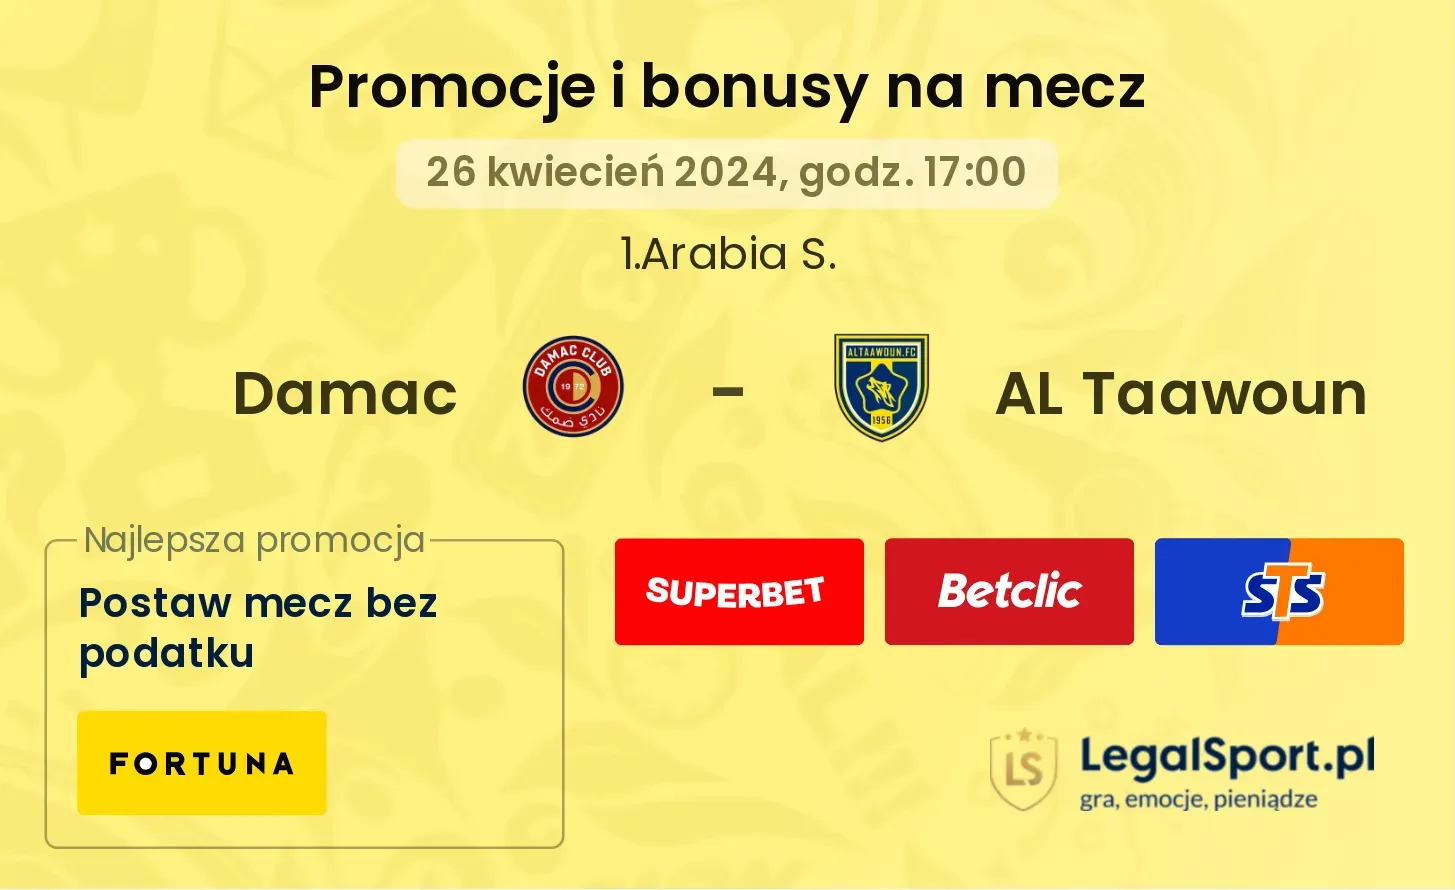 Damac - AL Taawoun promocje bonusy na mecz